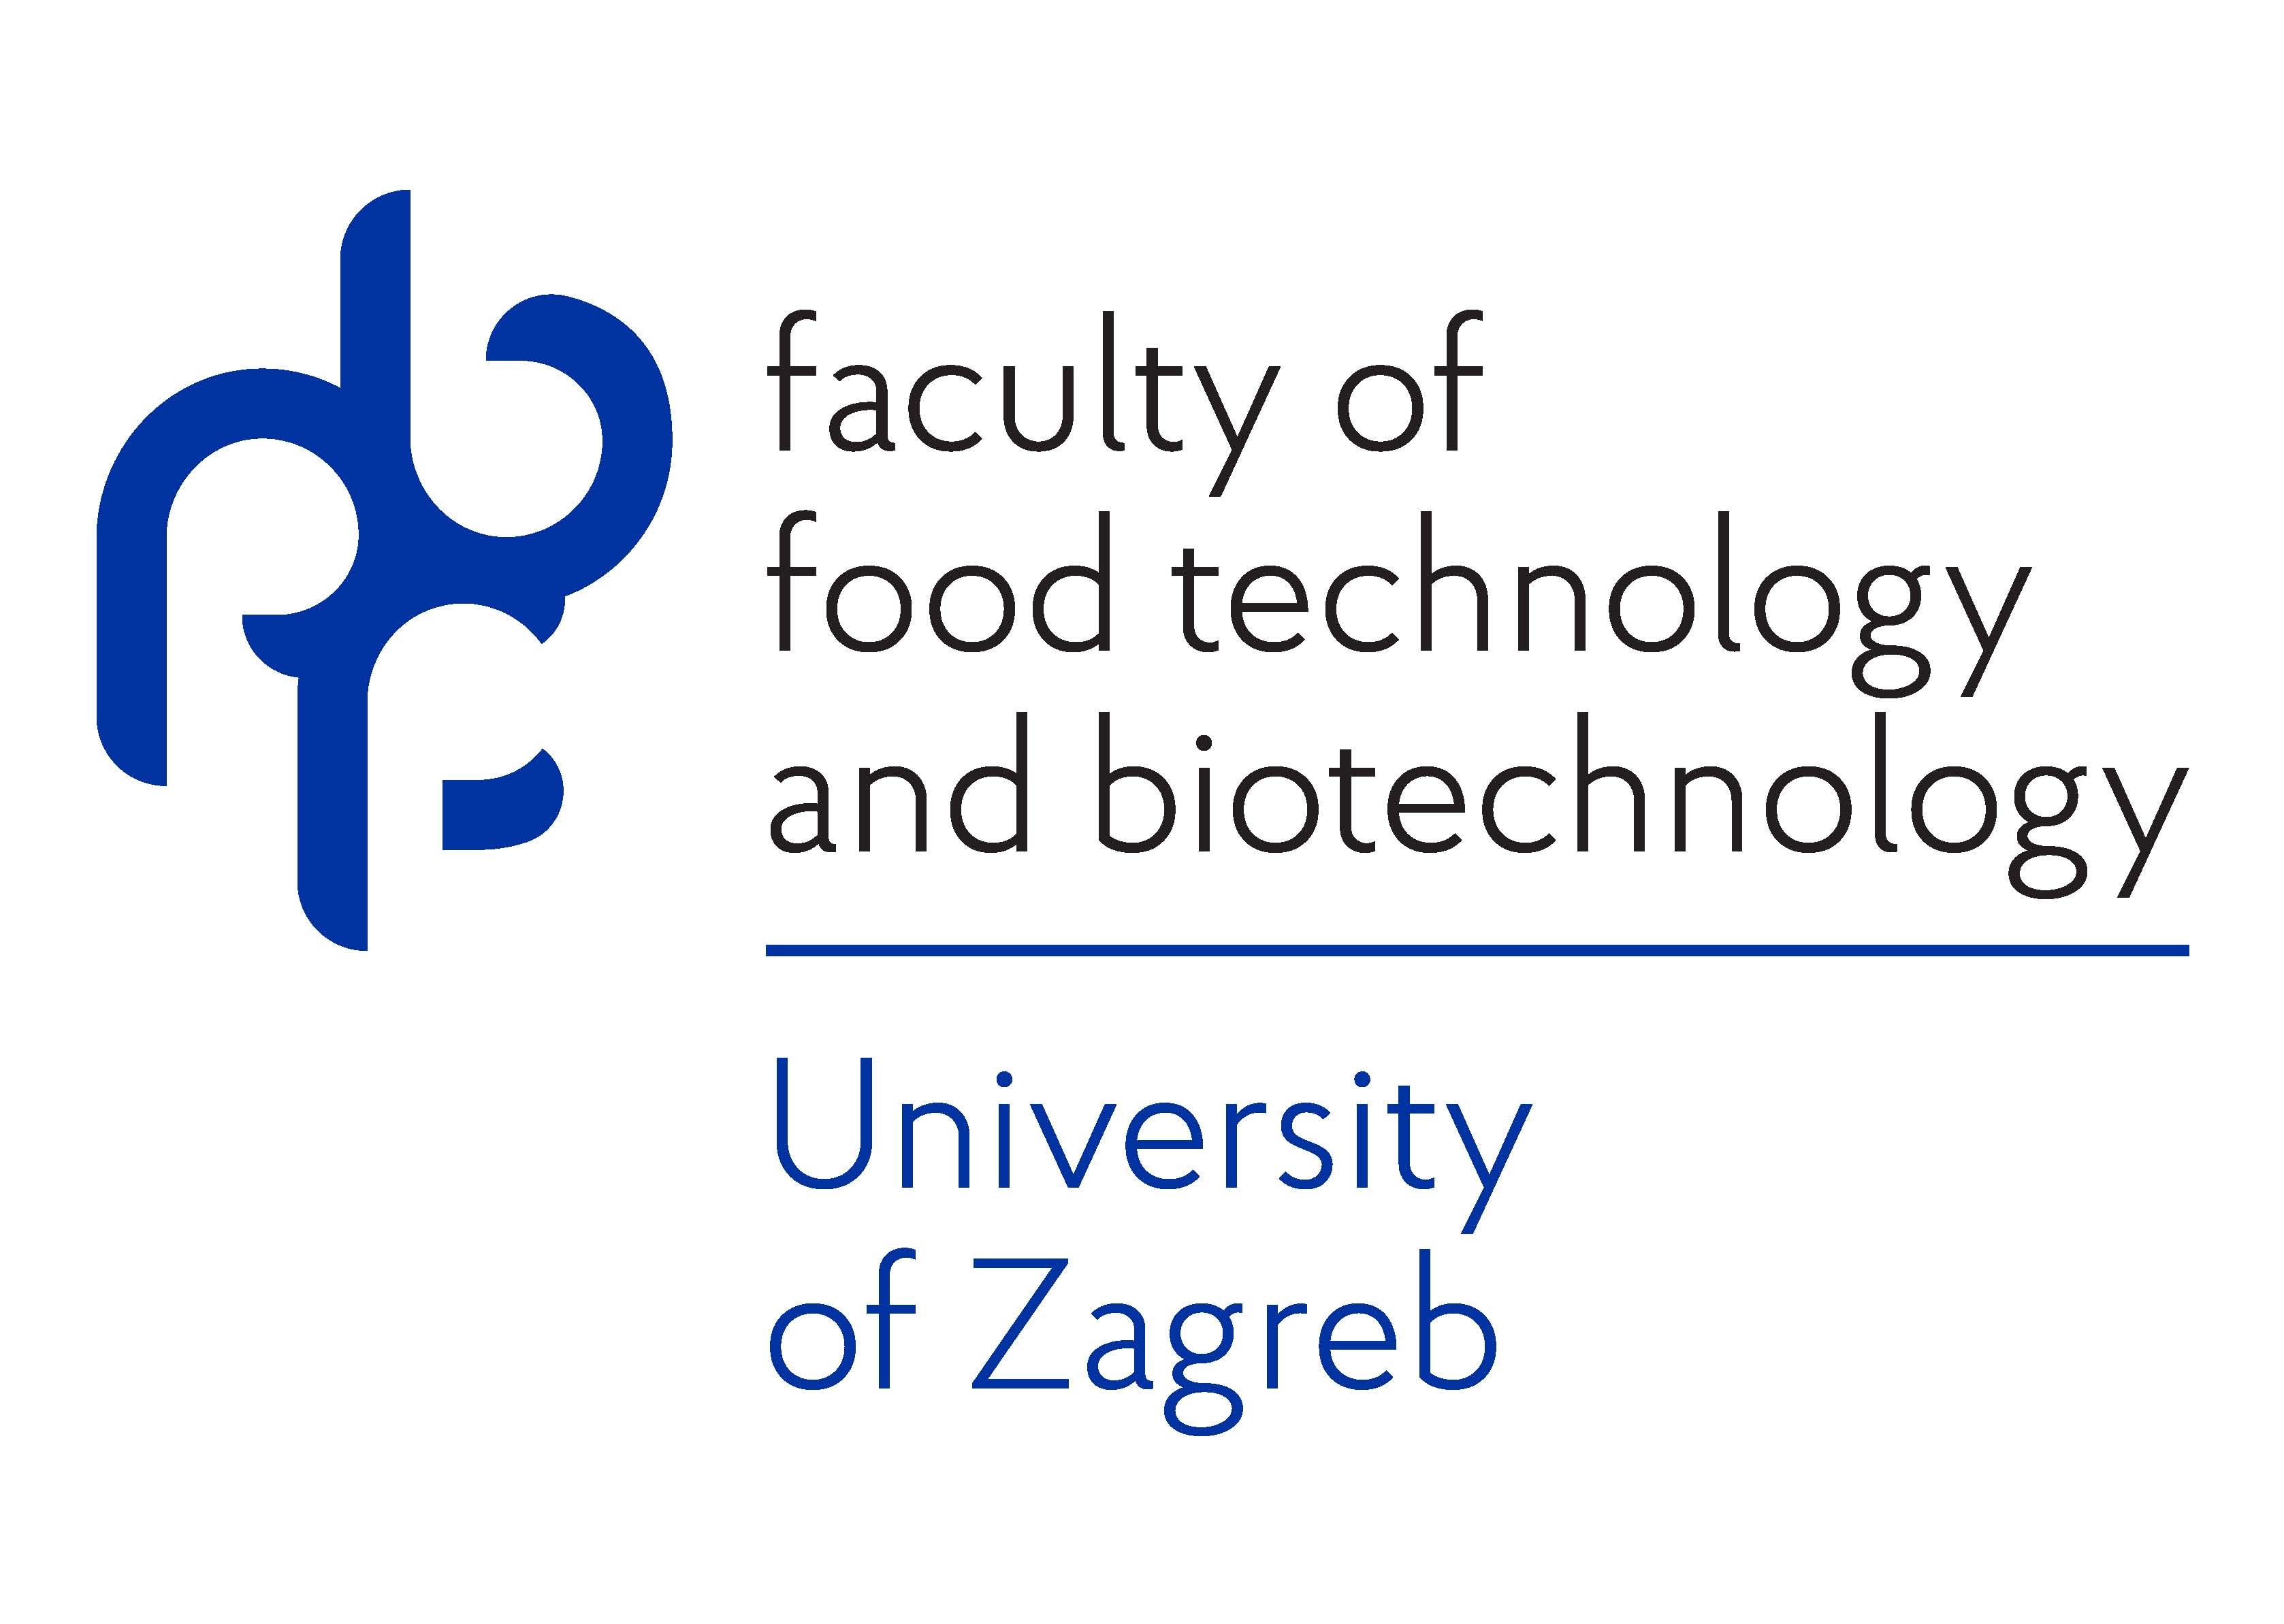 pbf_logo_en_university_of_zagreb_02.jpg